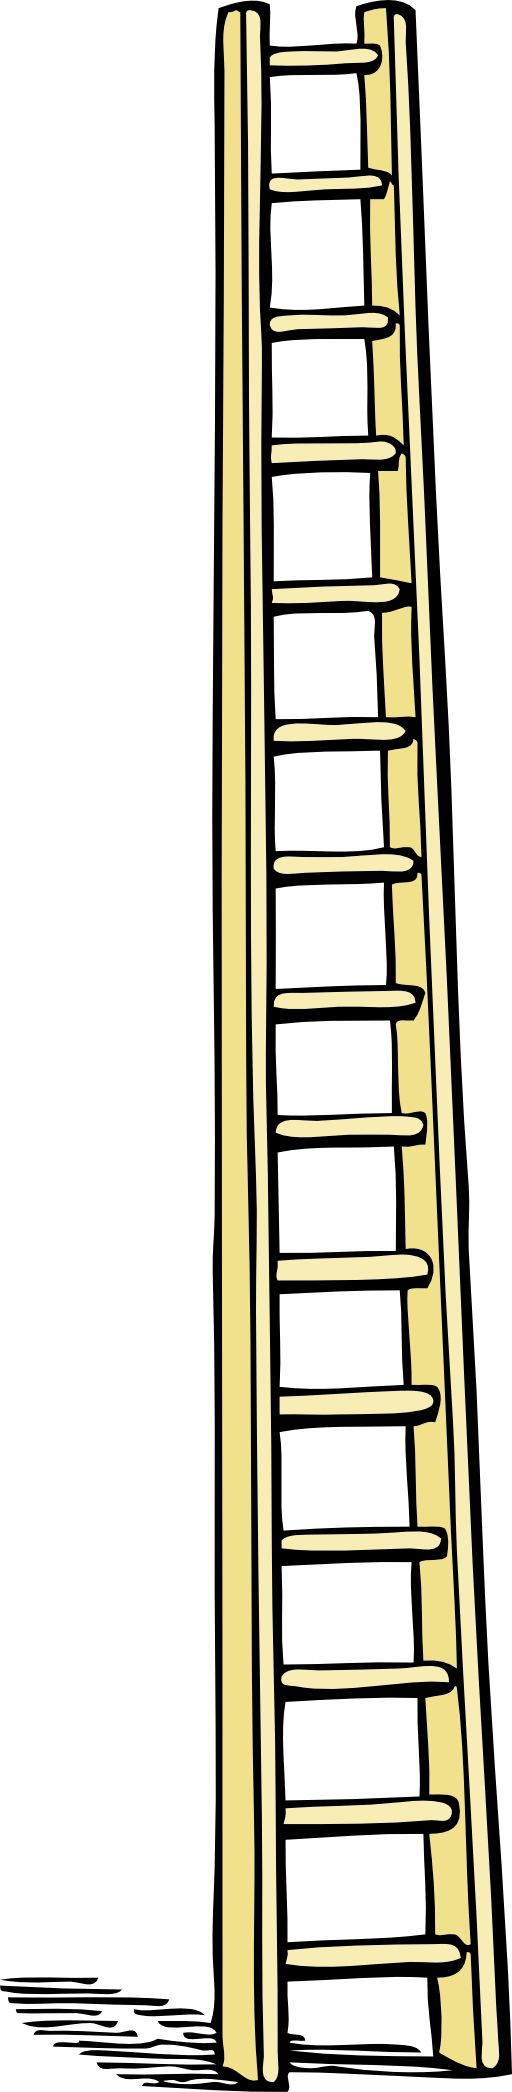 Free jacobs ladder.